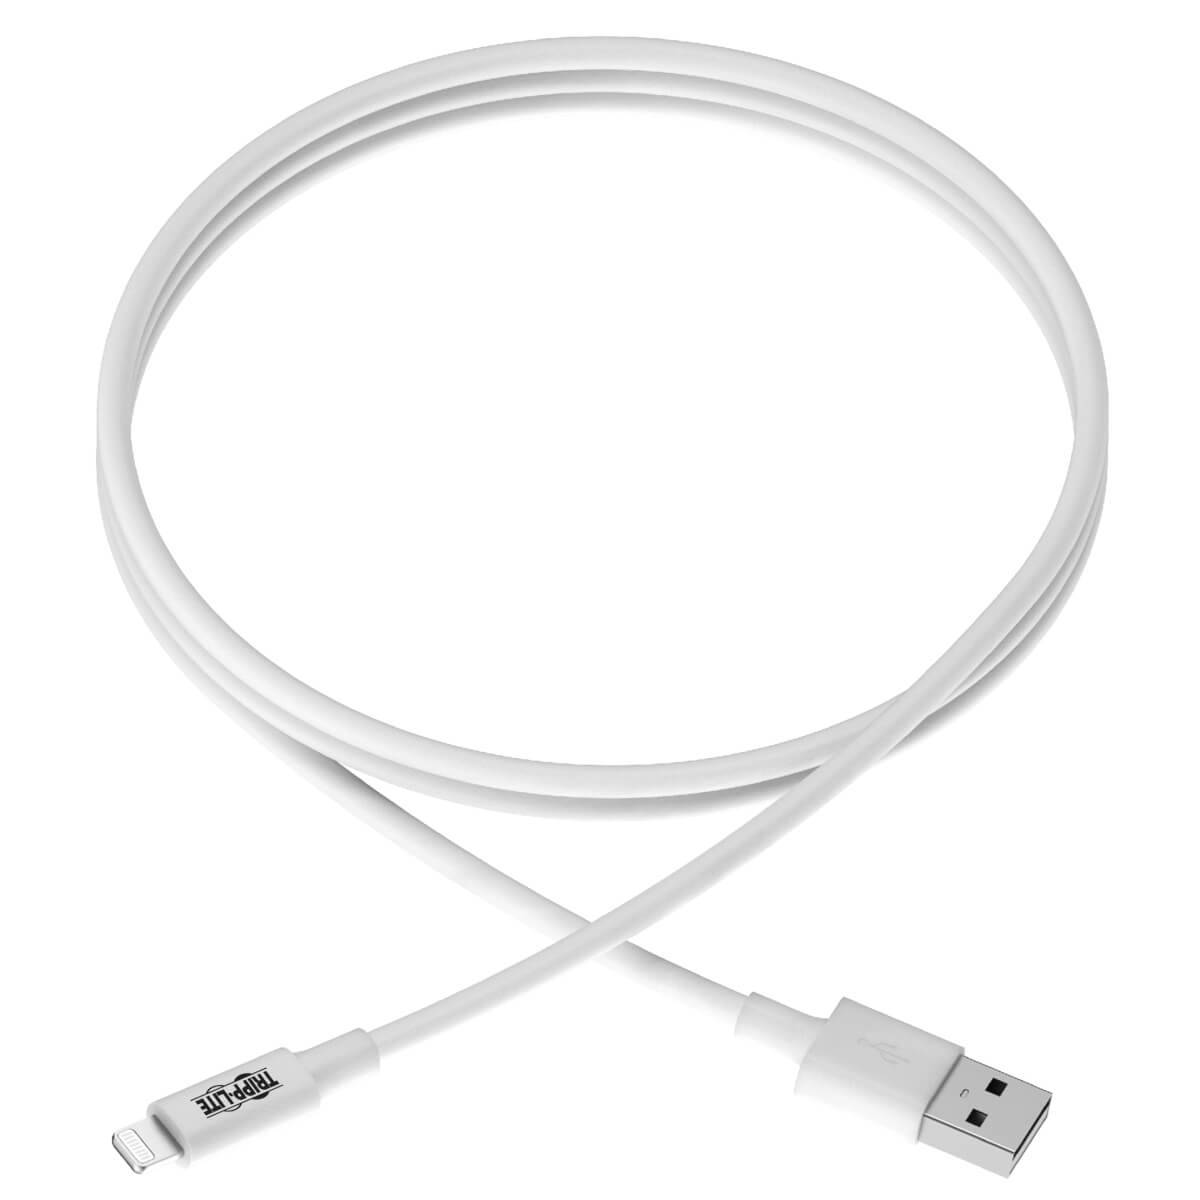 Rca Informatique - image du produit : USB LIGHTNING CABLE S YNC/CHARGE